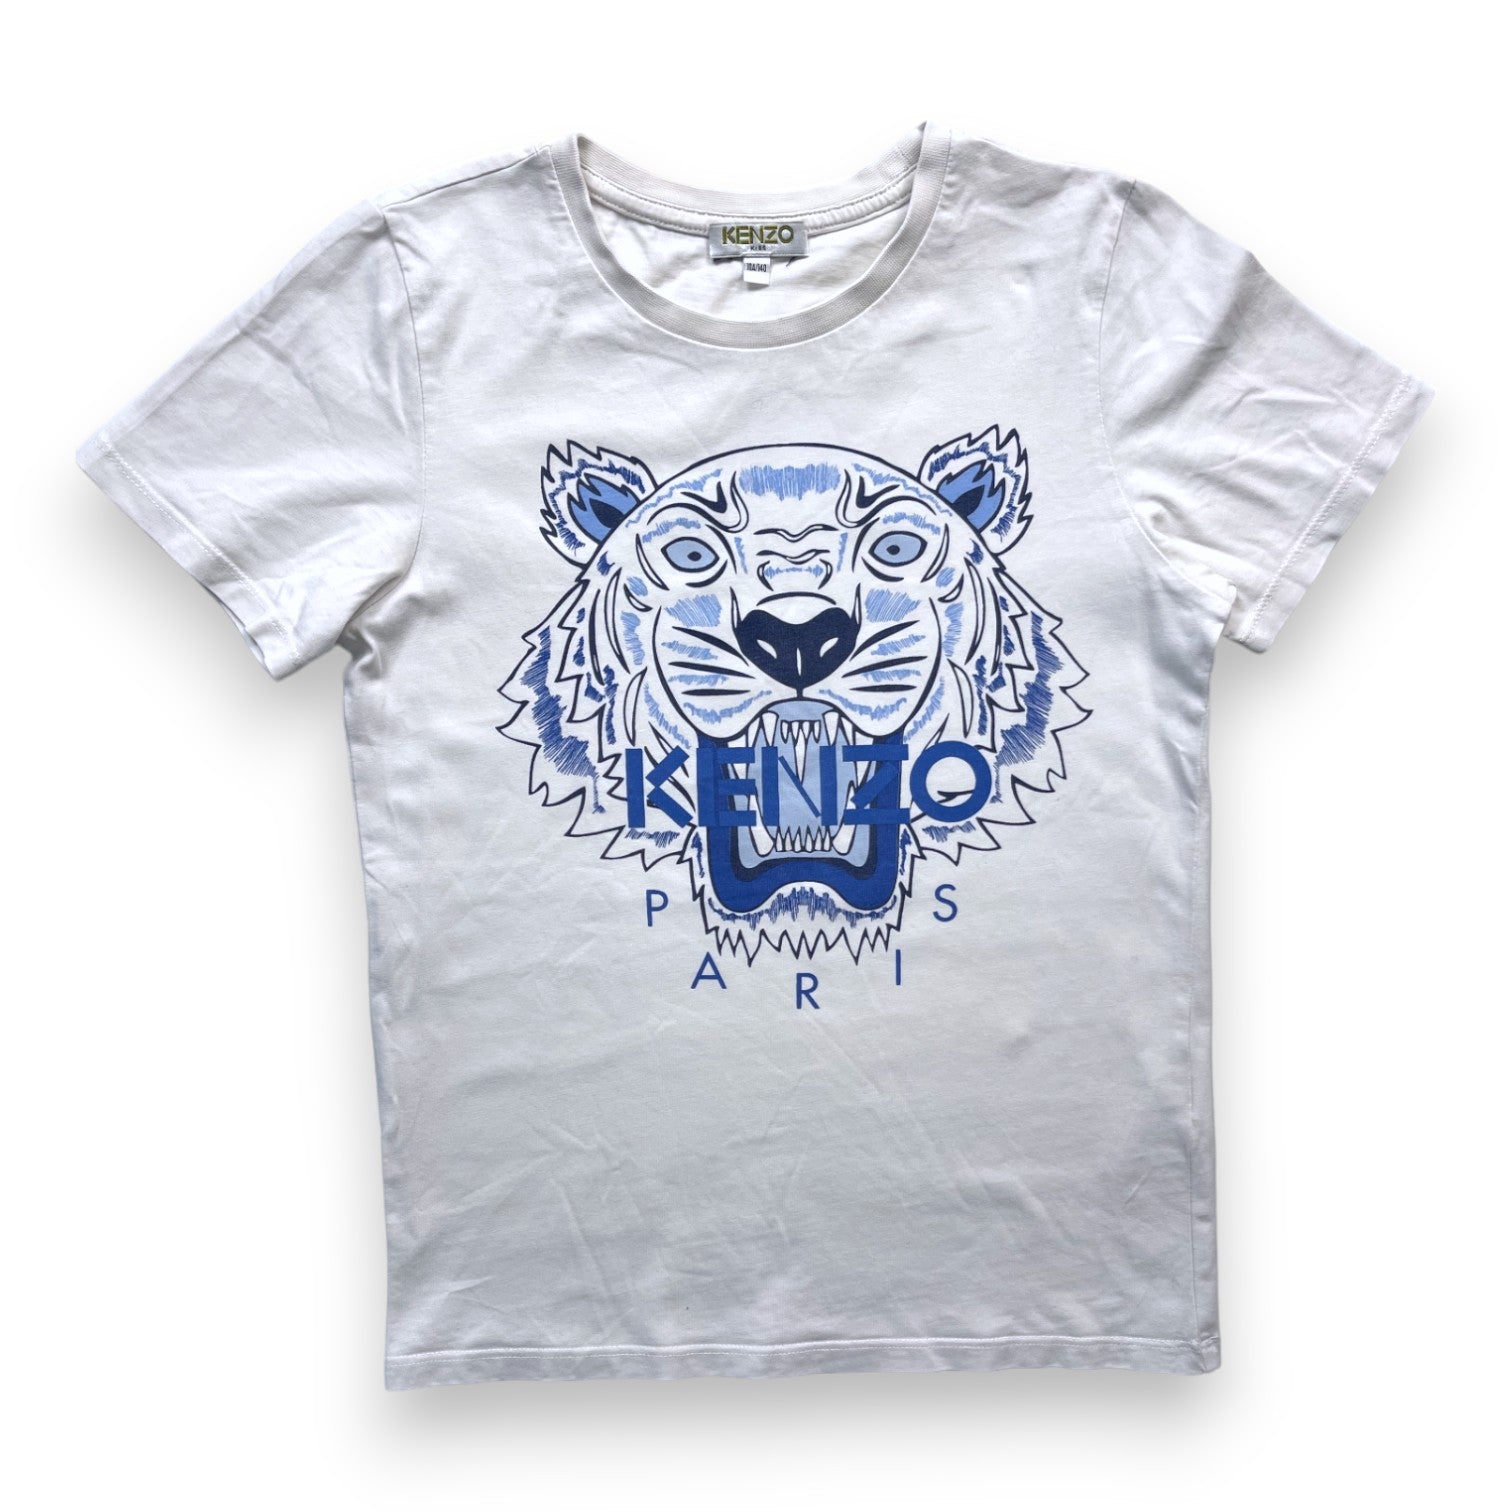 KENZO - T shirt manches courtes blanc tigre bleu - 10 ans